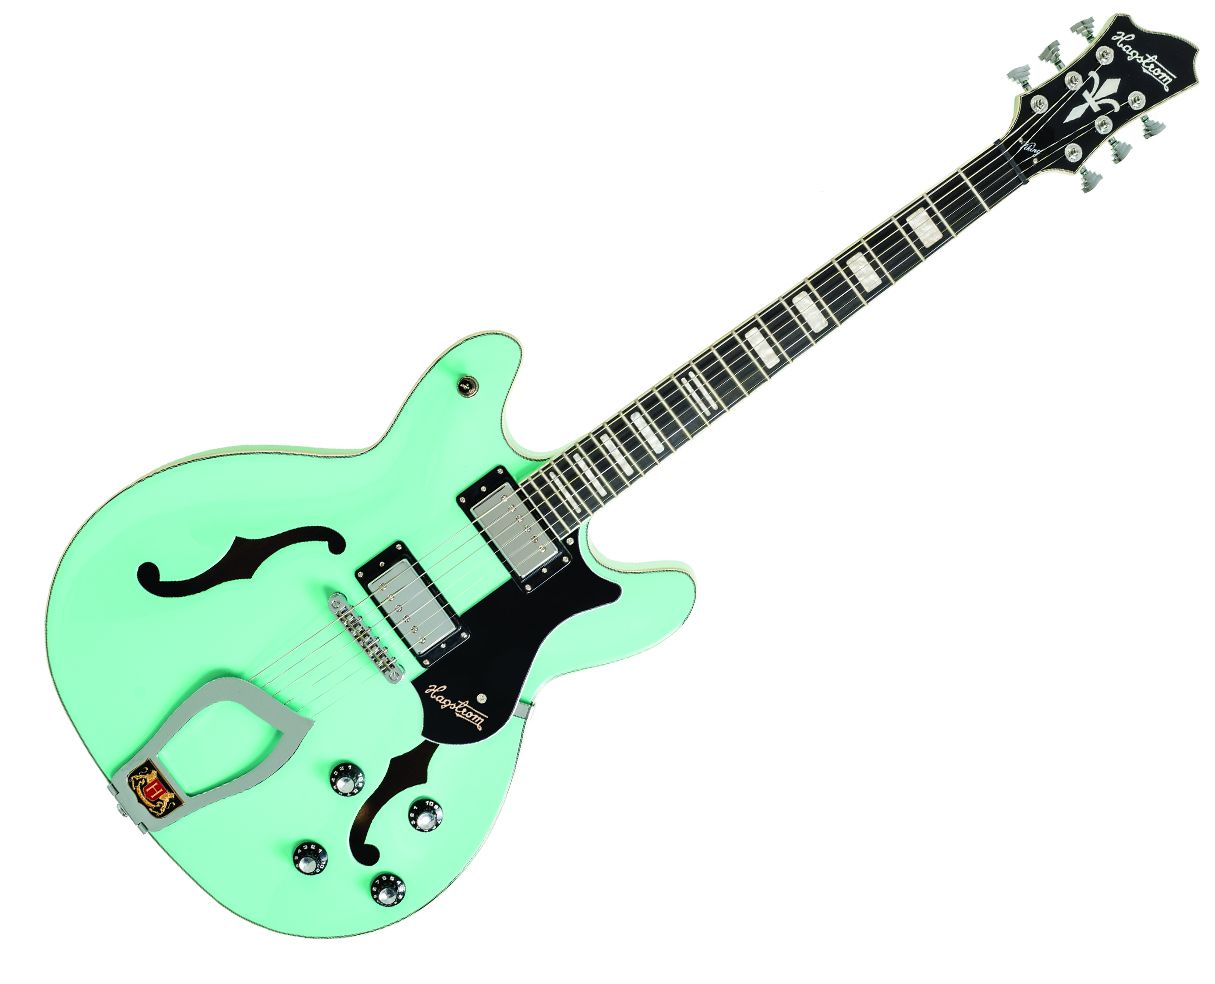 Hagstrom Viking Semi-Hollow Electric Guitar - Aged Sky Blue $549.99